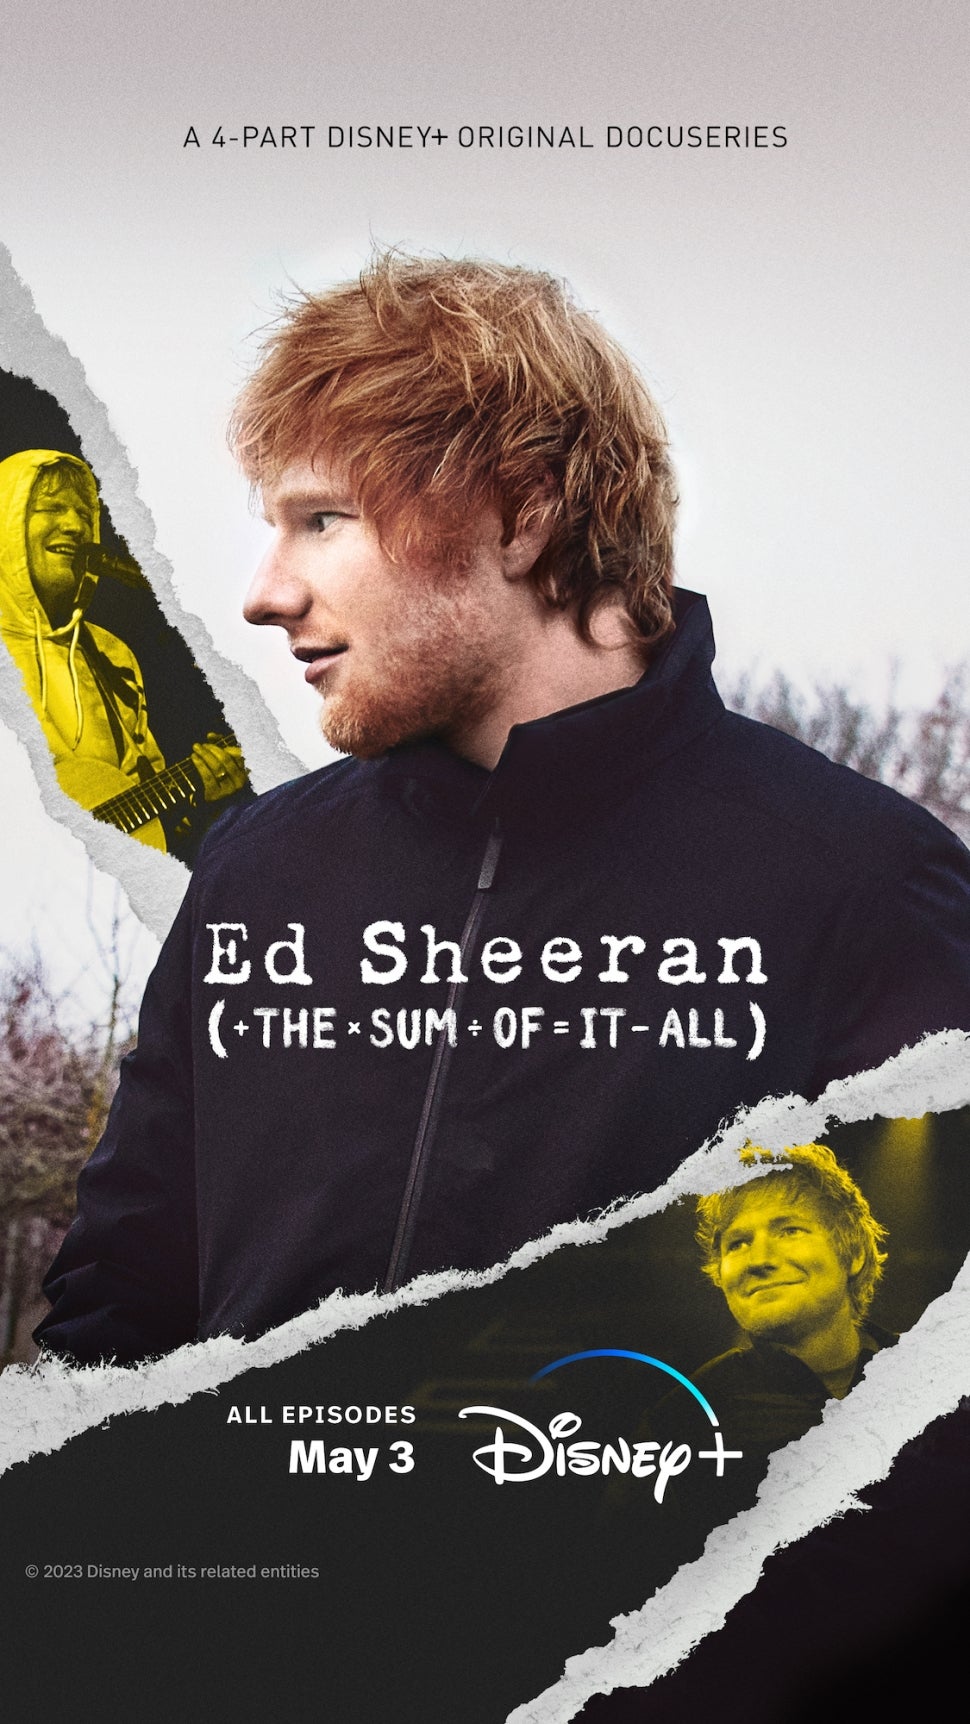 Ed Sheeran: The Sum of It All 